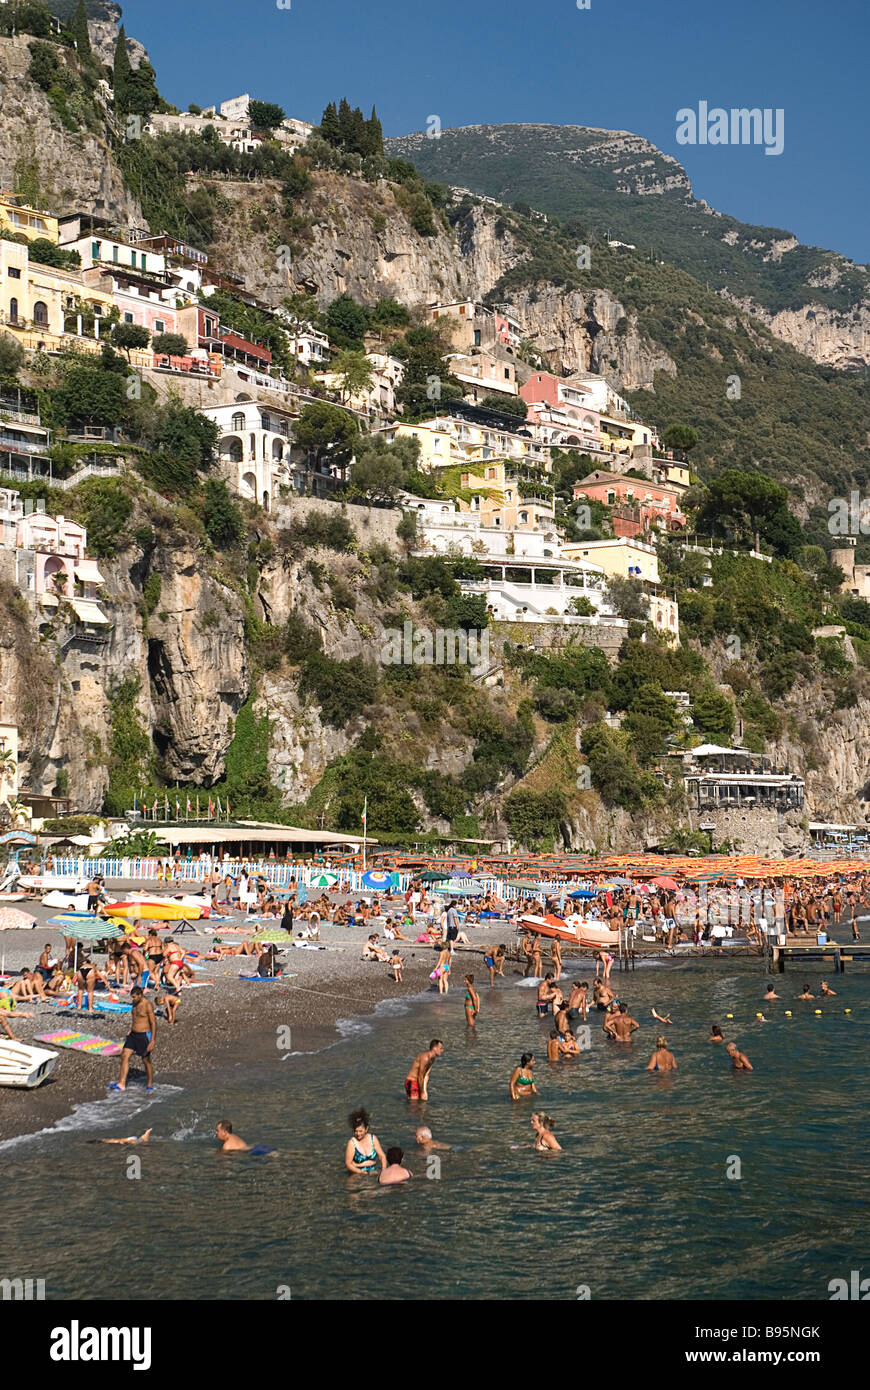 Italy, Campania, Salerno, Positano, busy Spiaggia Grande beach on the Amalfi Coast with buildings on steep hillside behind. Stock Photo